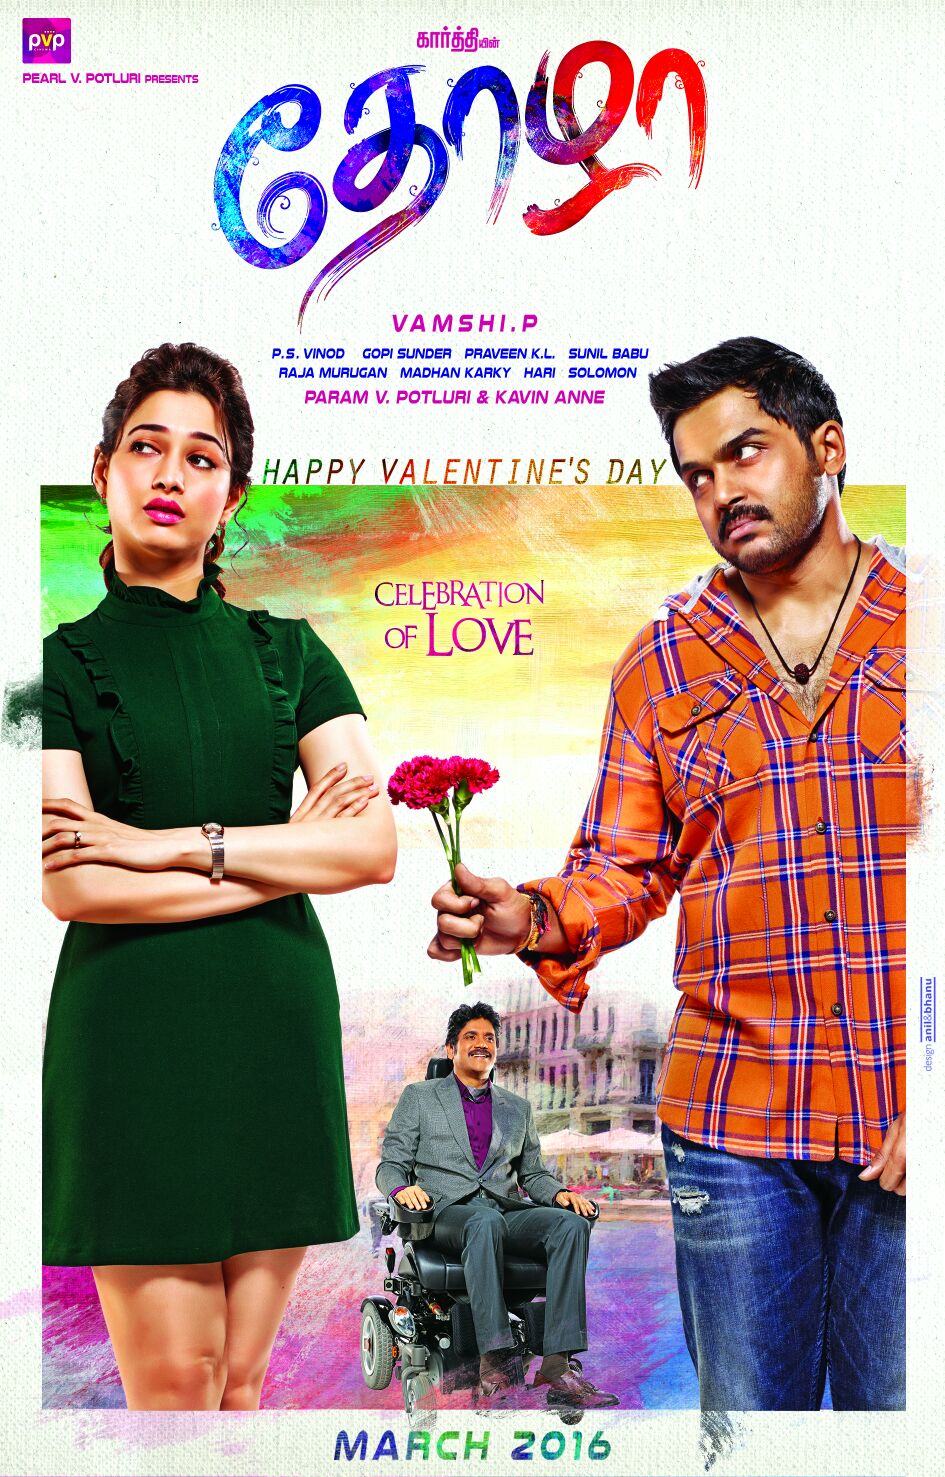 tamil movies 720p free download website